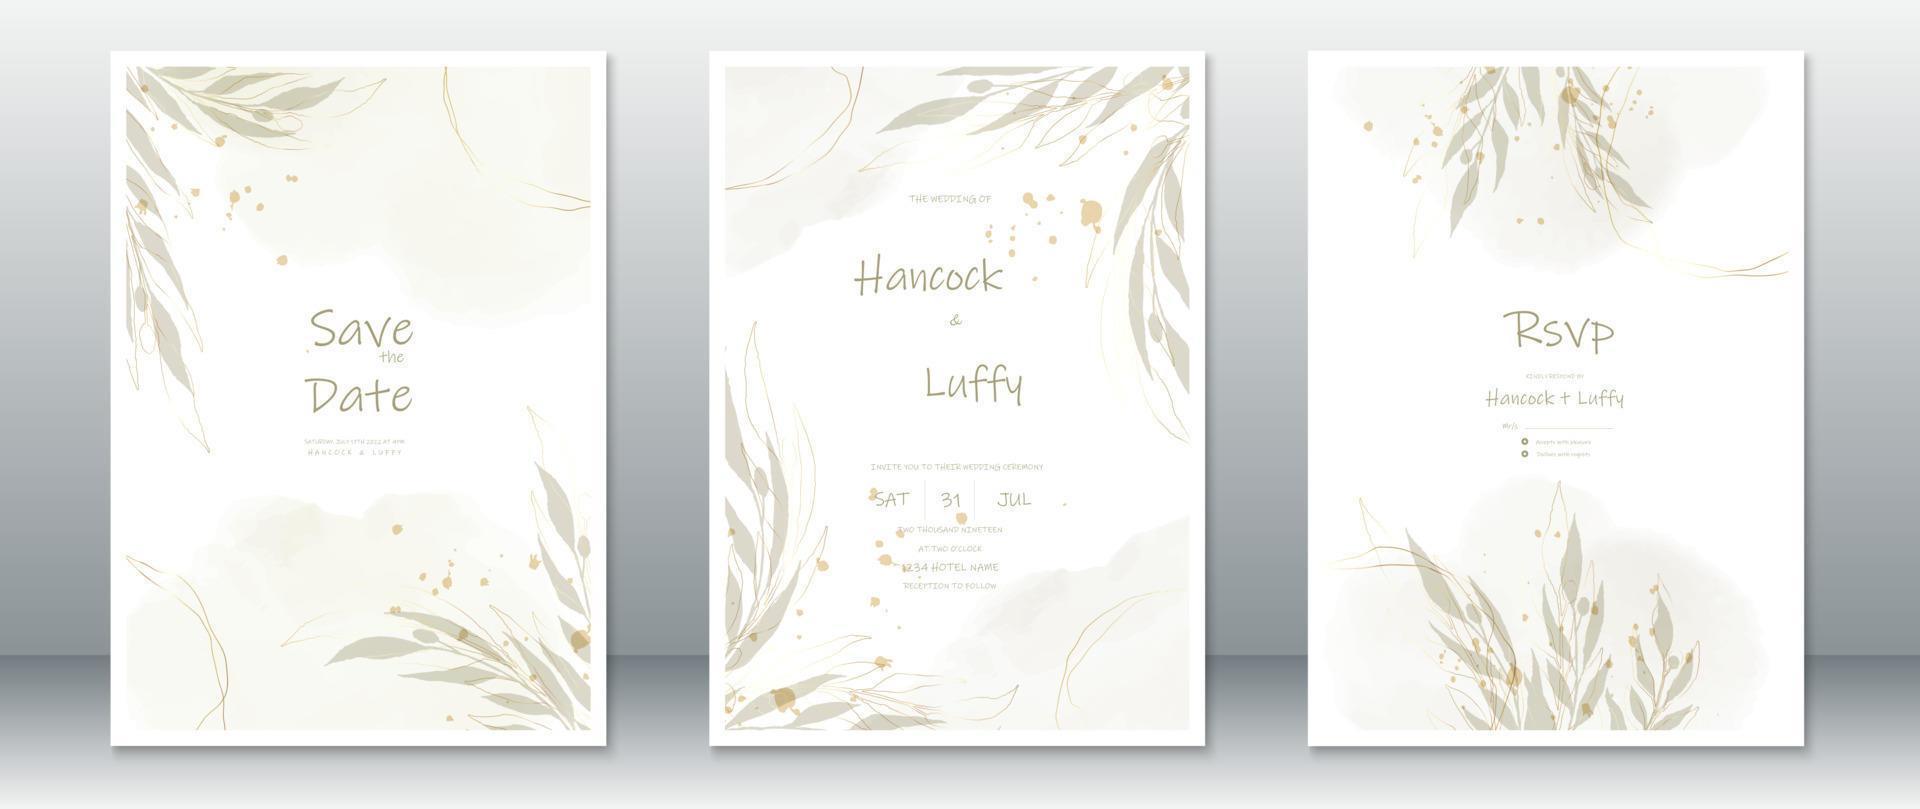 Wedding invitation card watercolor background vector